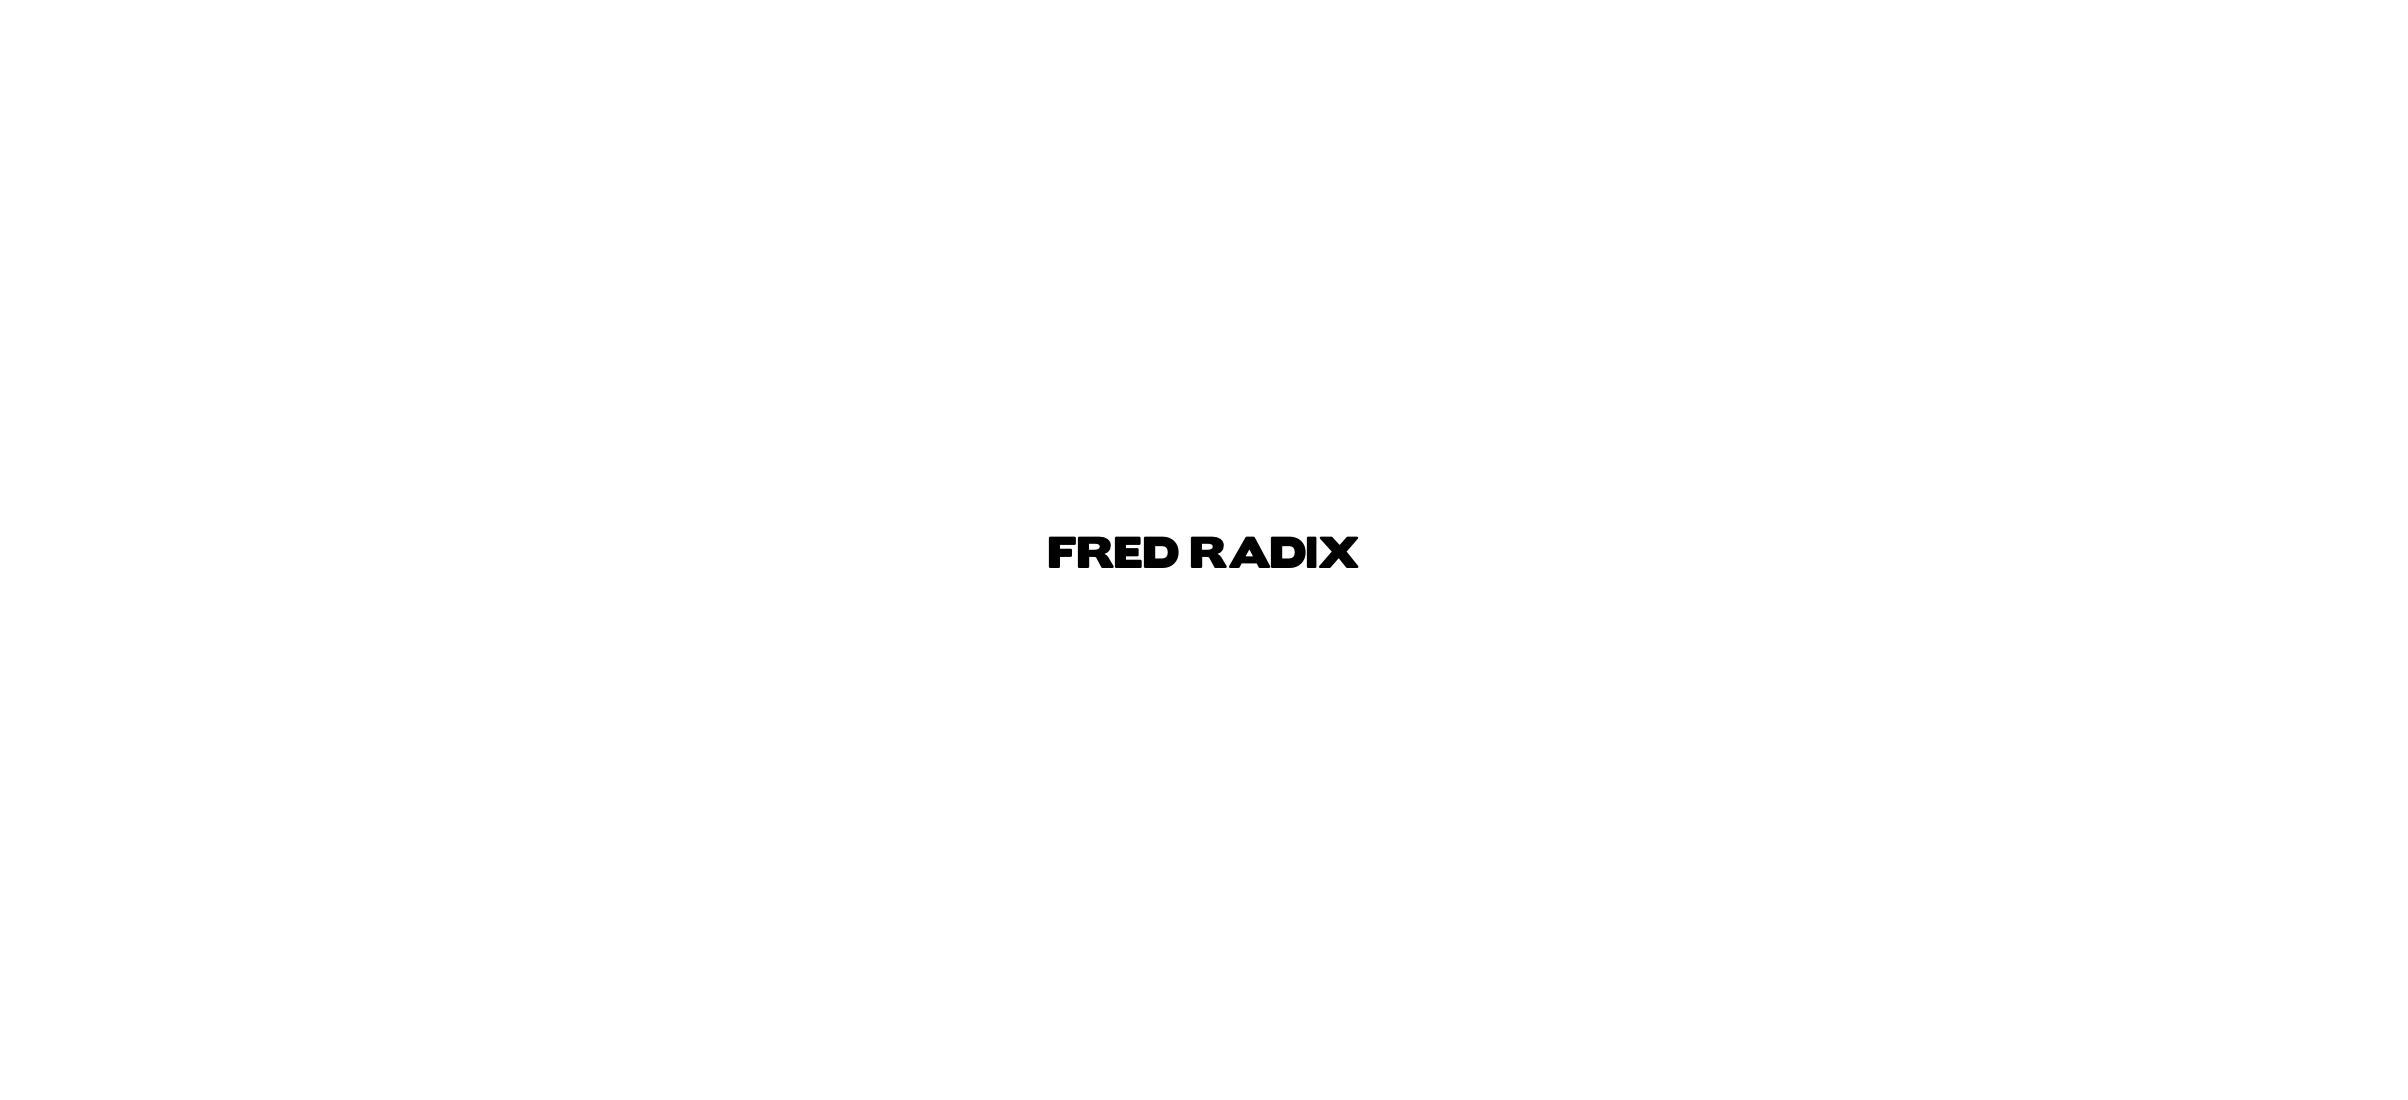 FRED RADIX